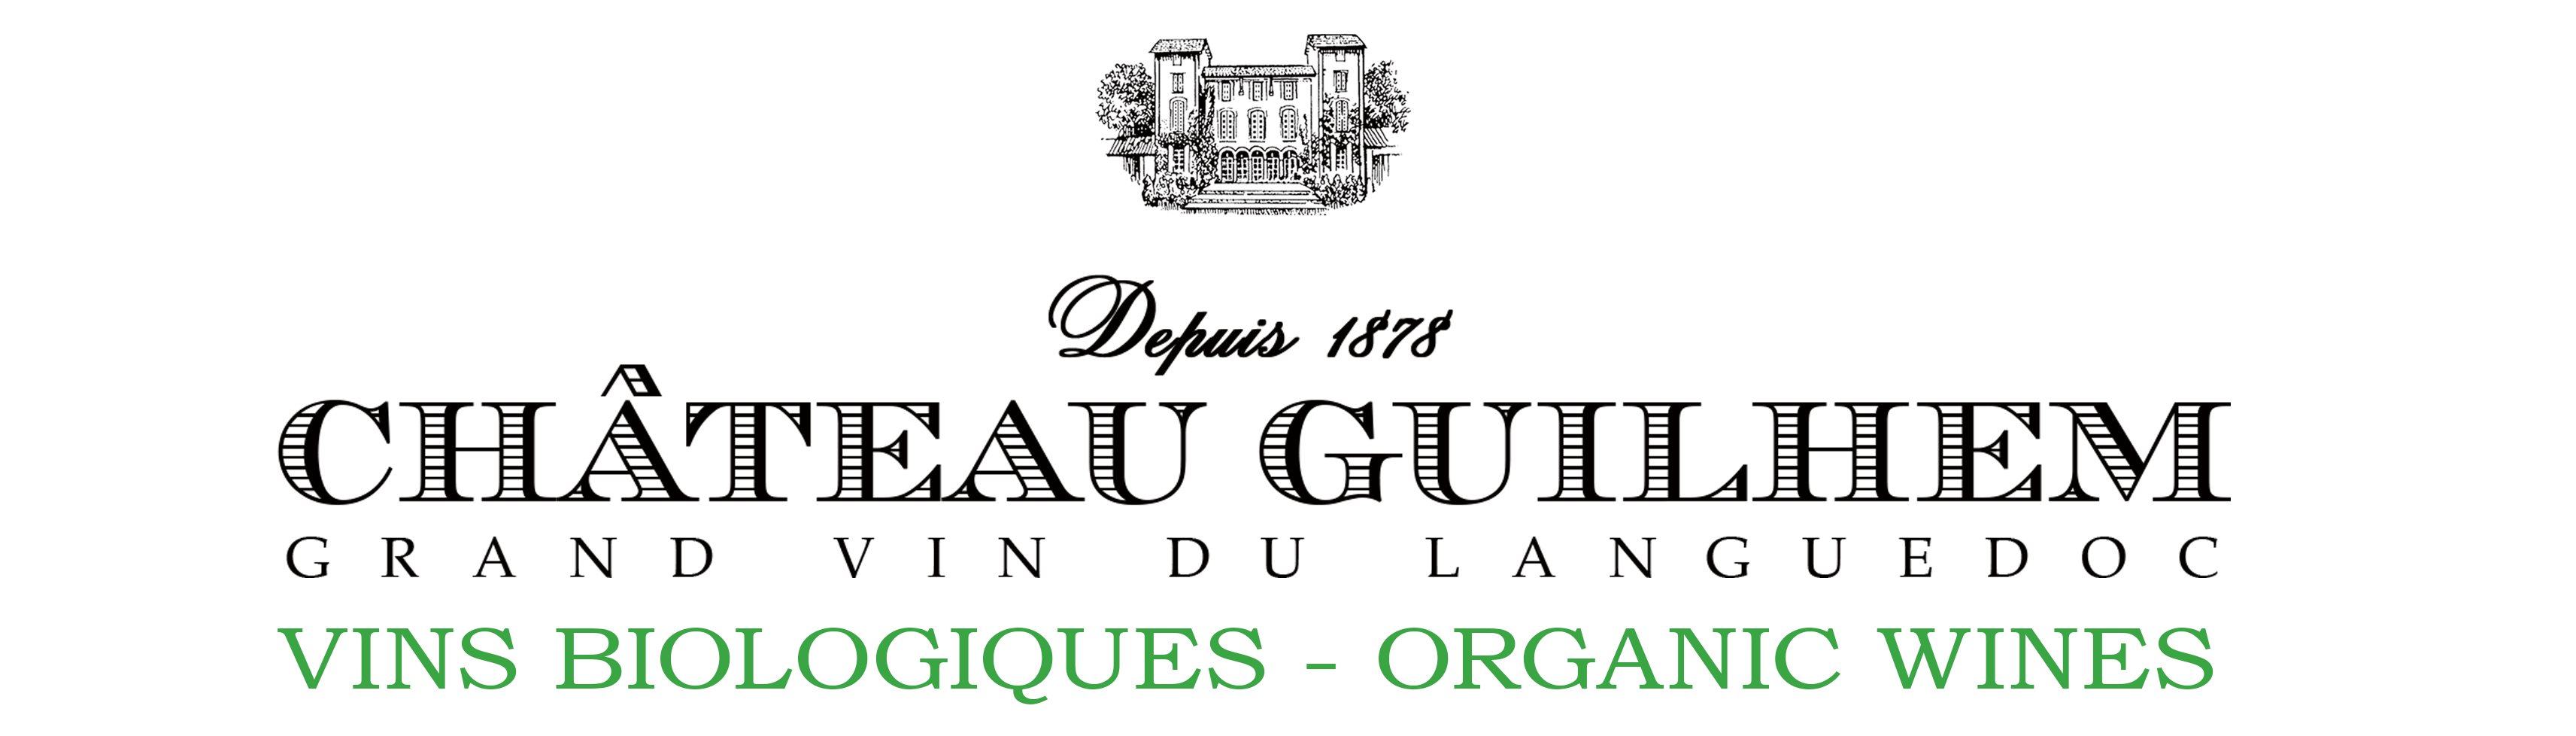 Logo Château Guilhem - Vins du Languedoc - Vins biologiques